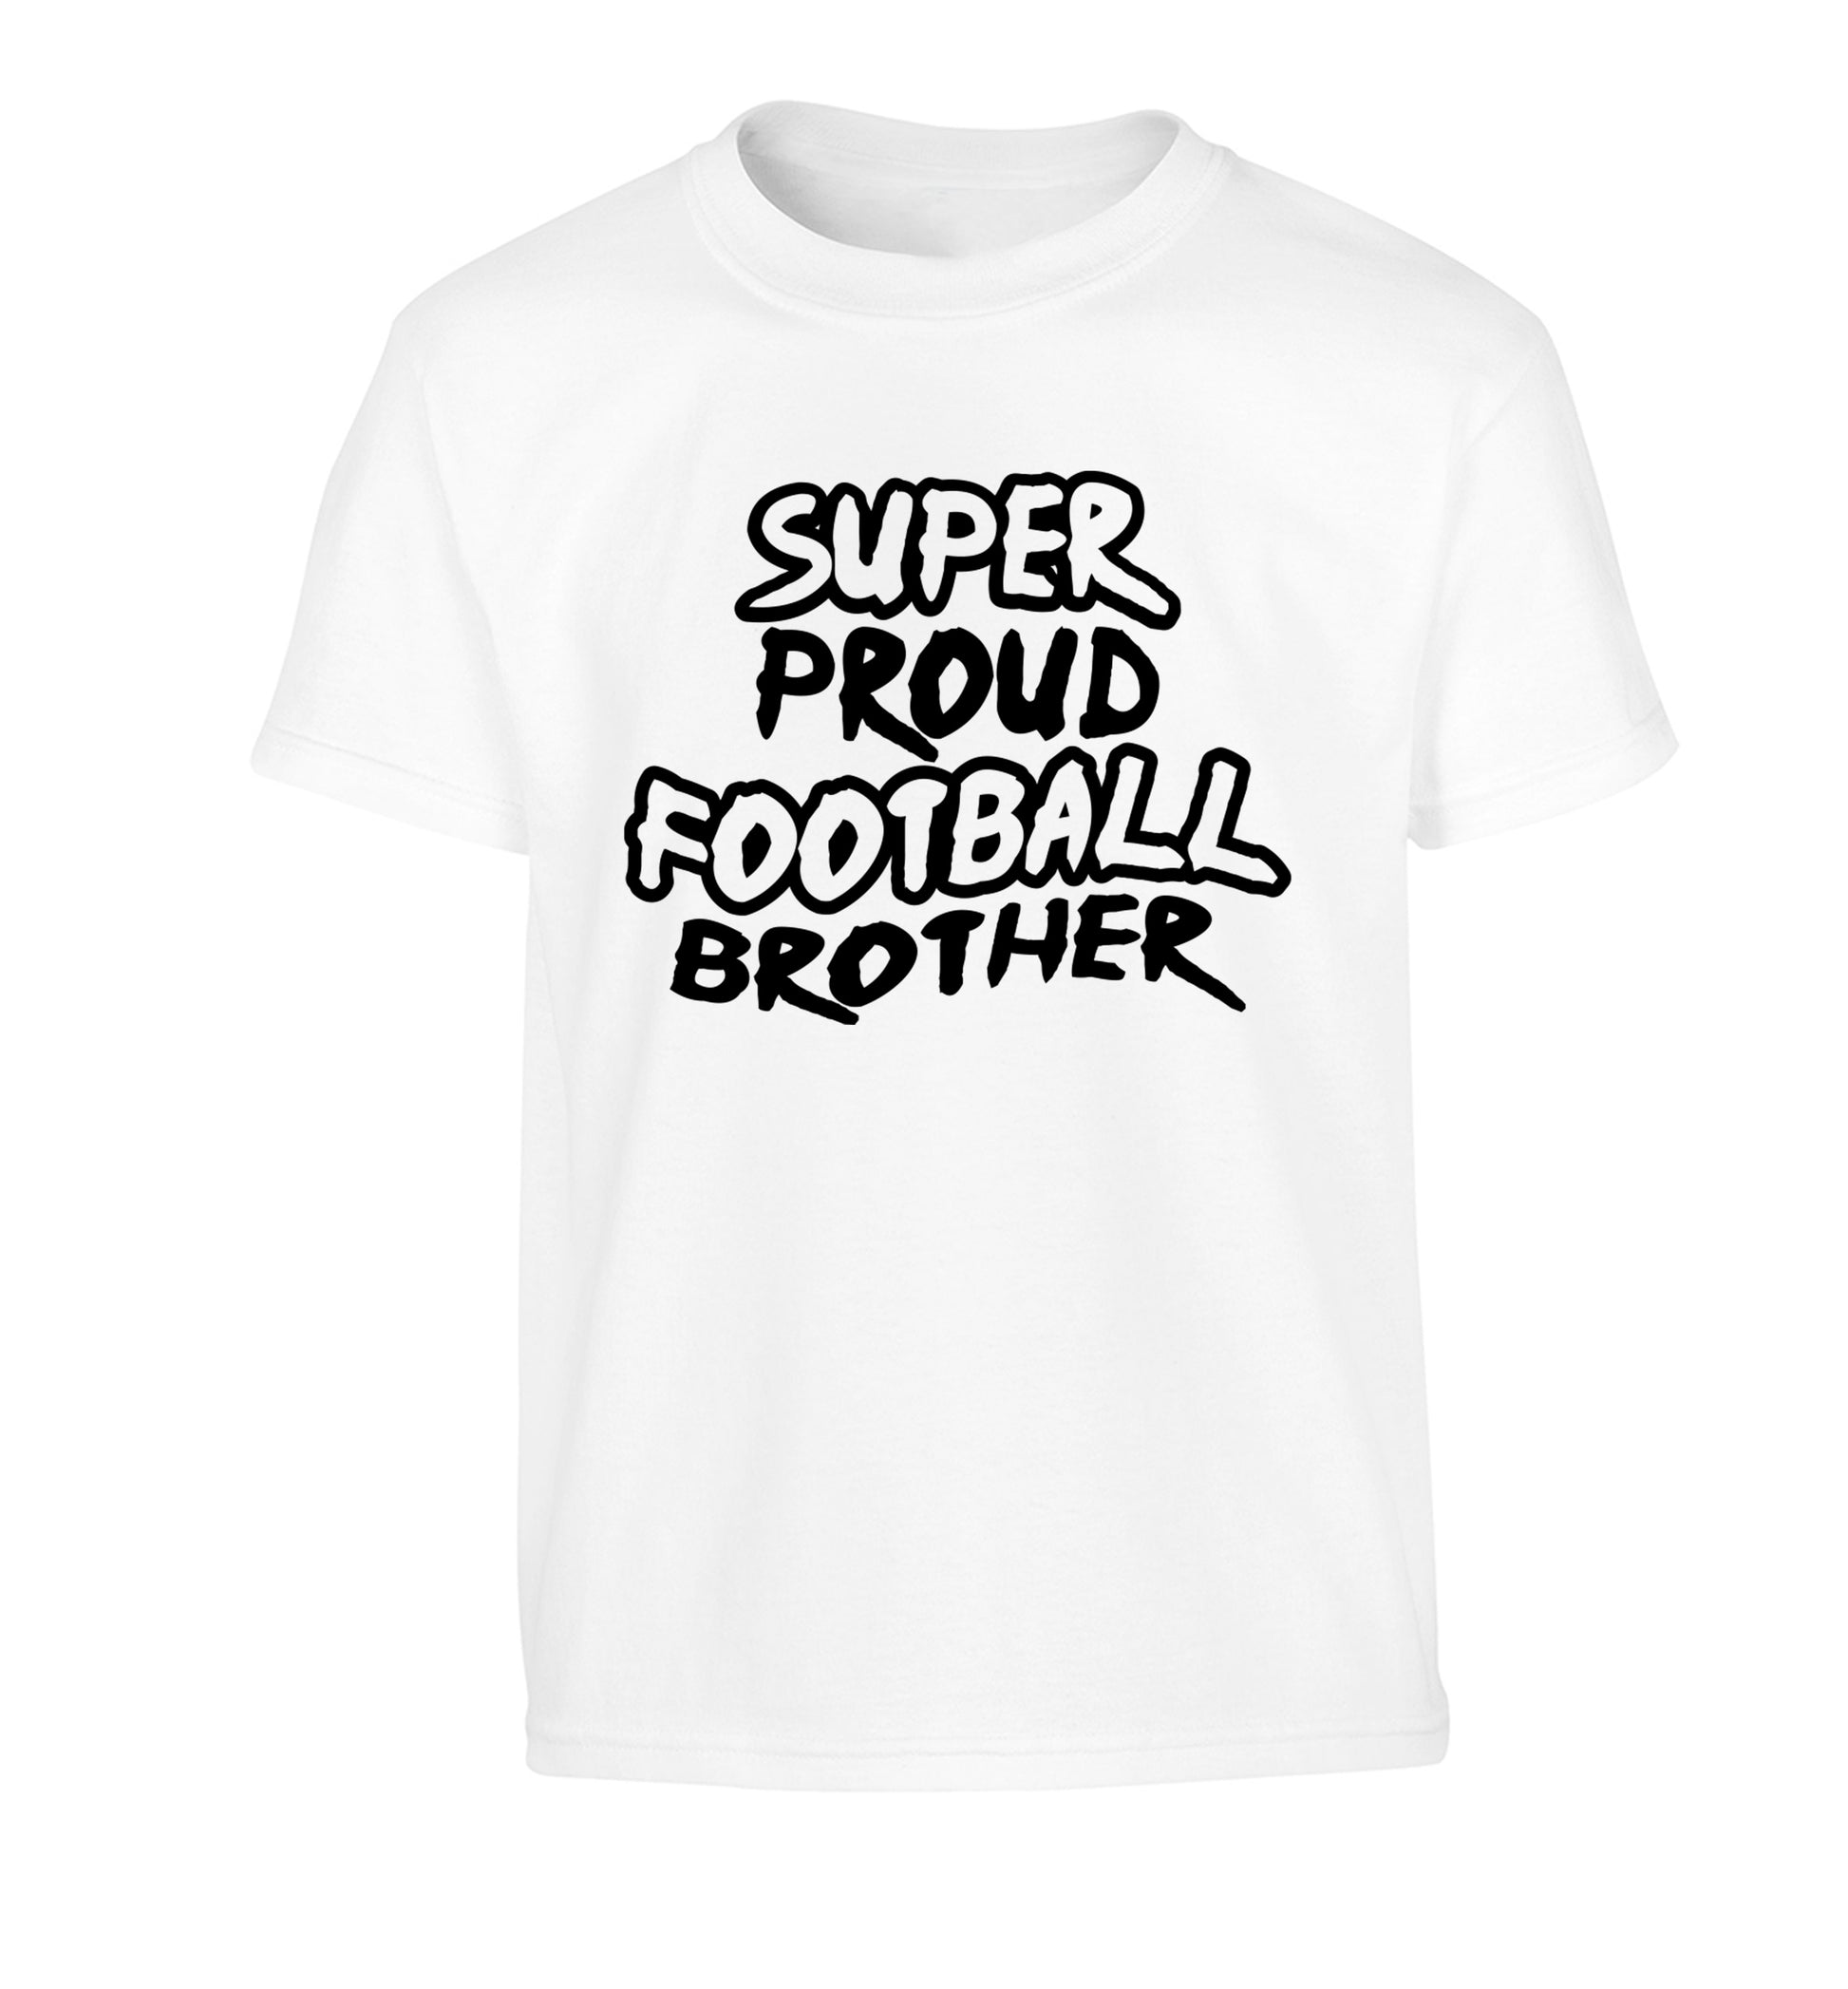 Super proud football brother Children's white Tshirt 12-14 Years